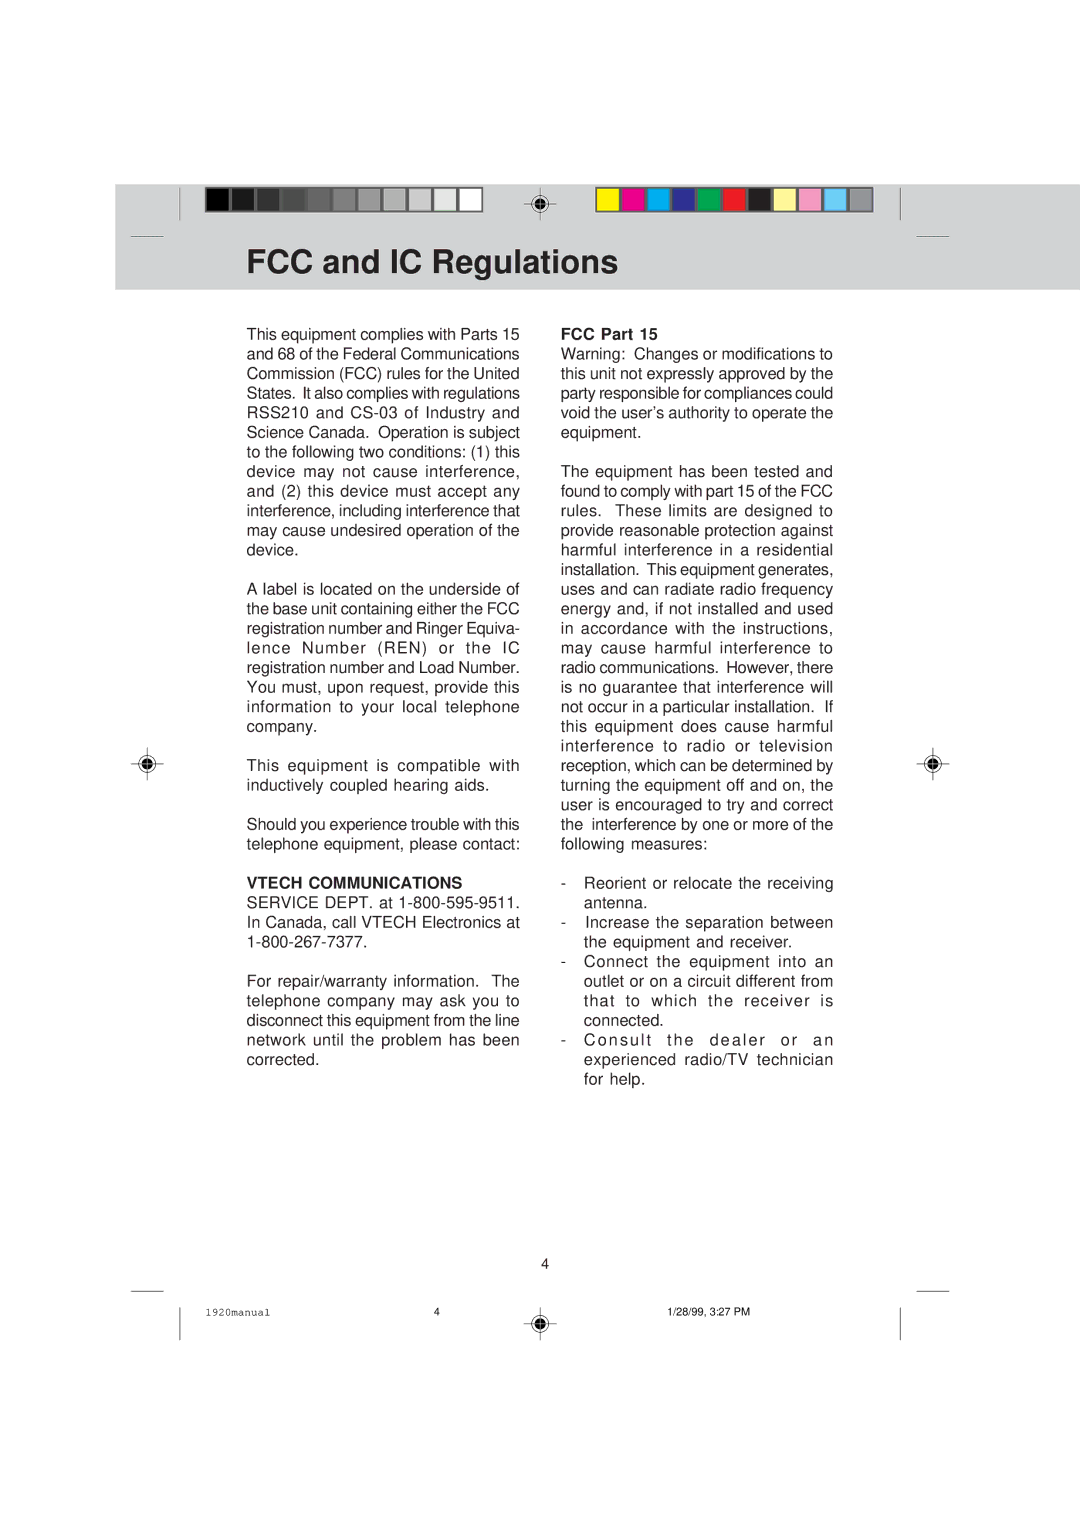 VTech VT 1920C manual FCC and IC Regulations, FCC Part 